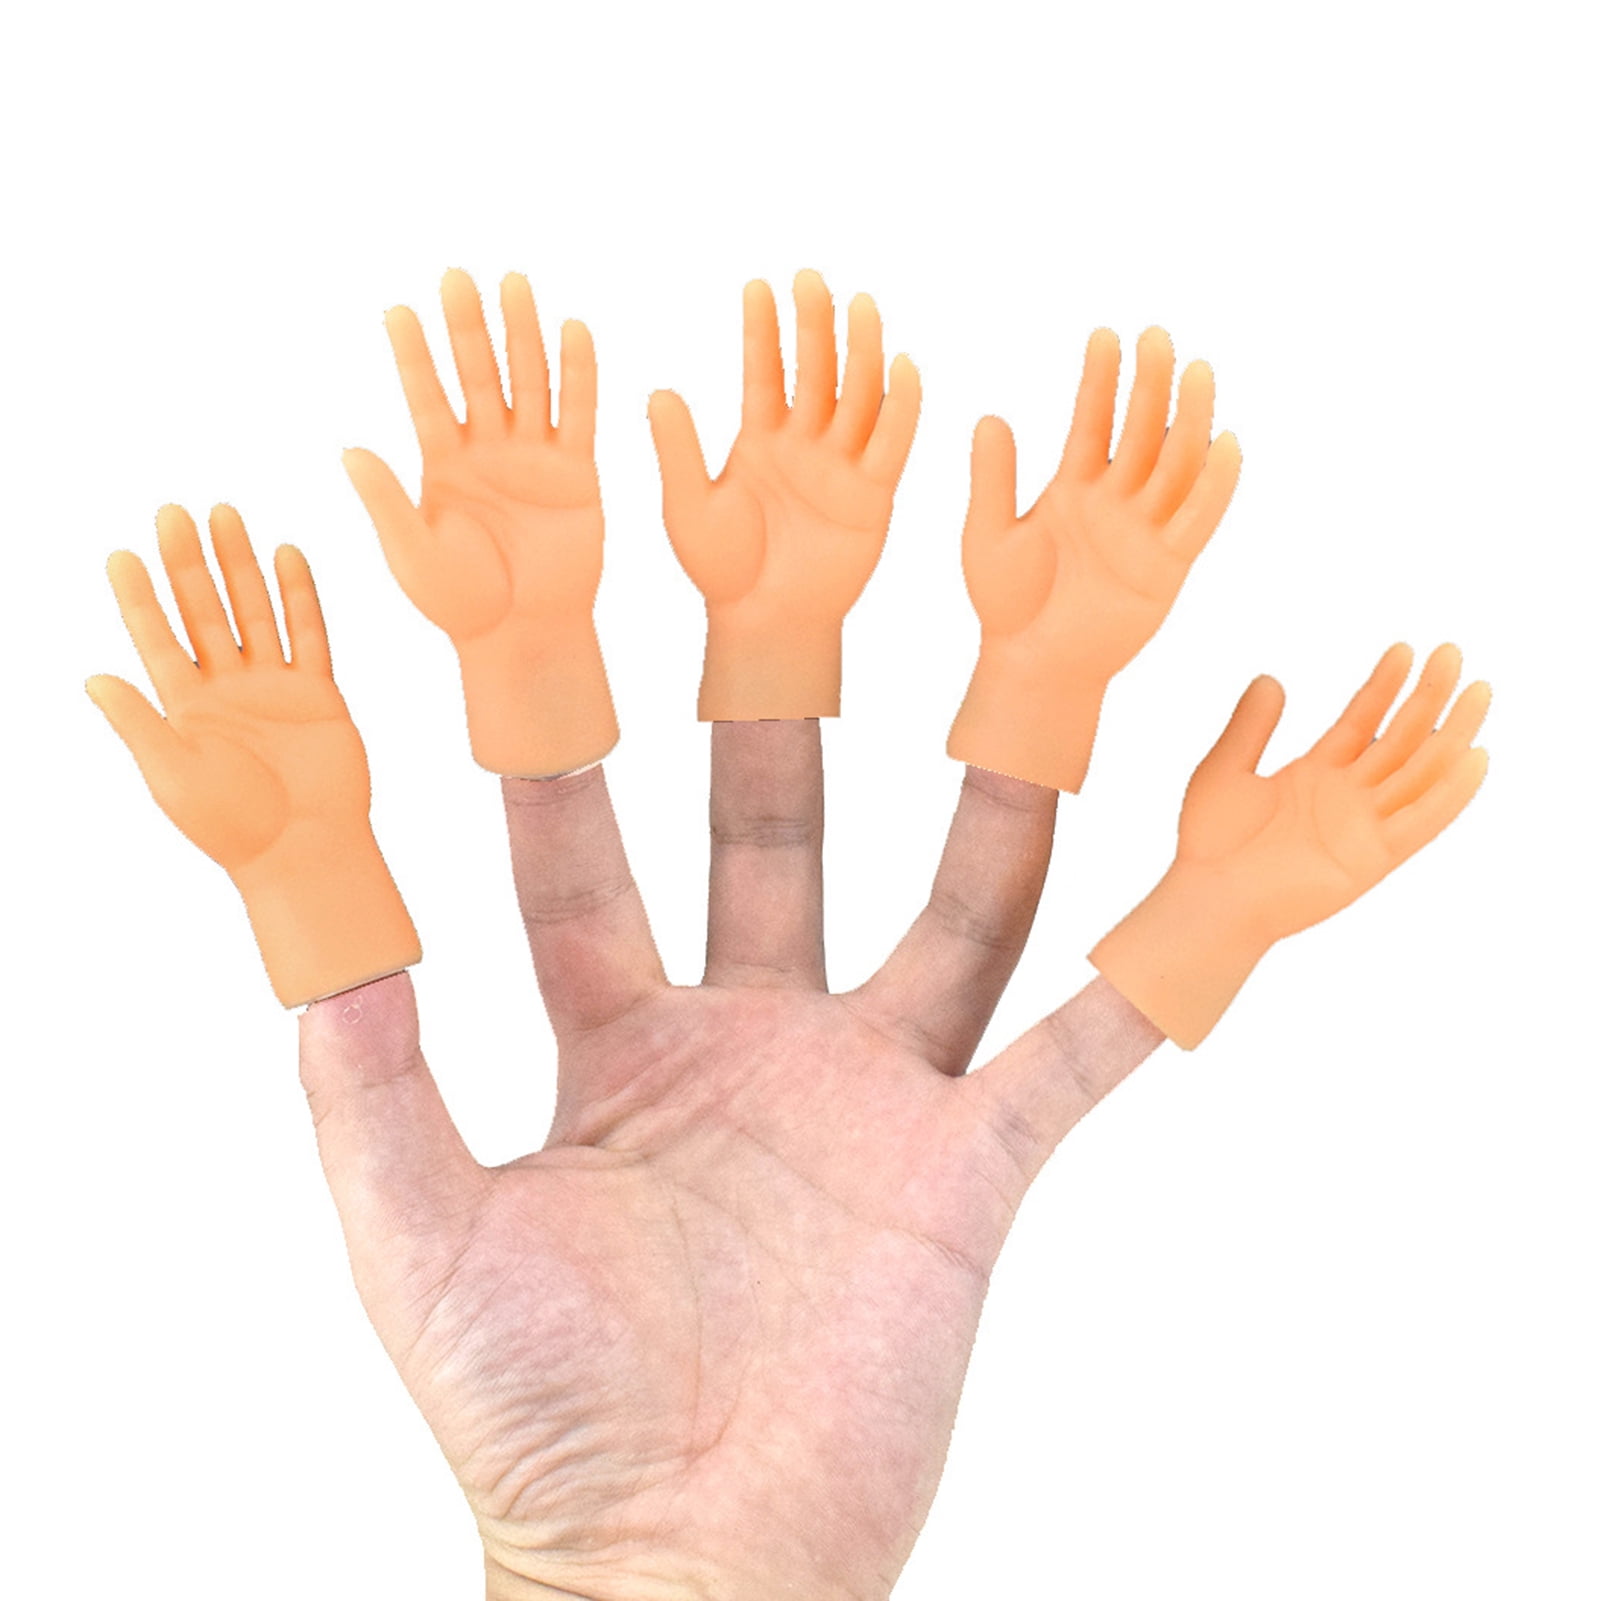 Toynk Tiny Hands 4.5-inch Novelty Toys